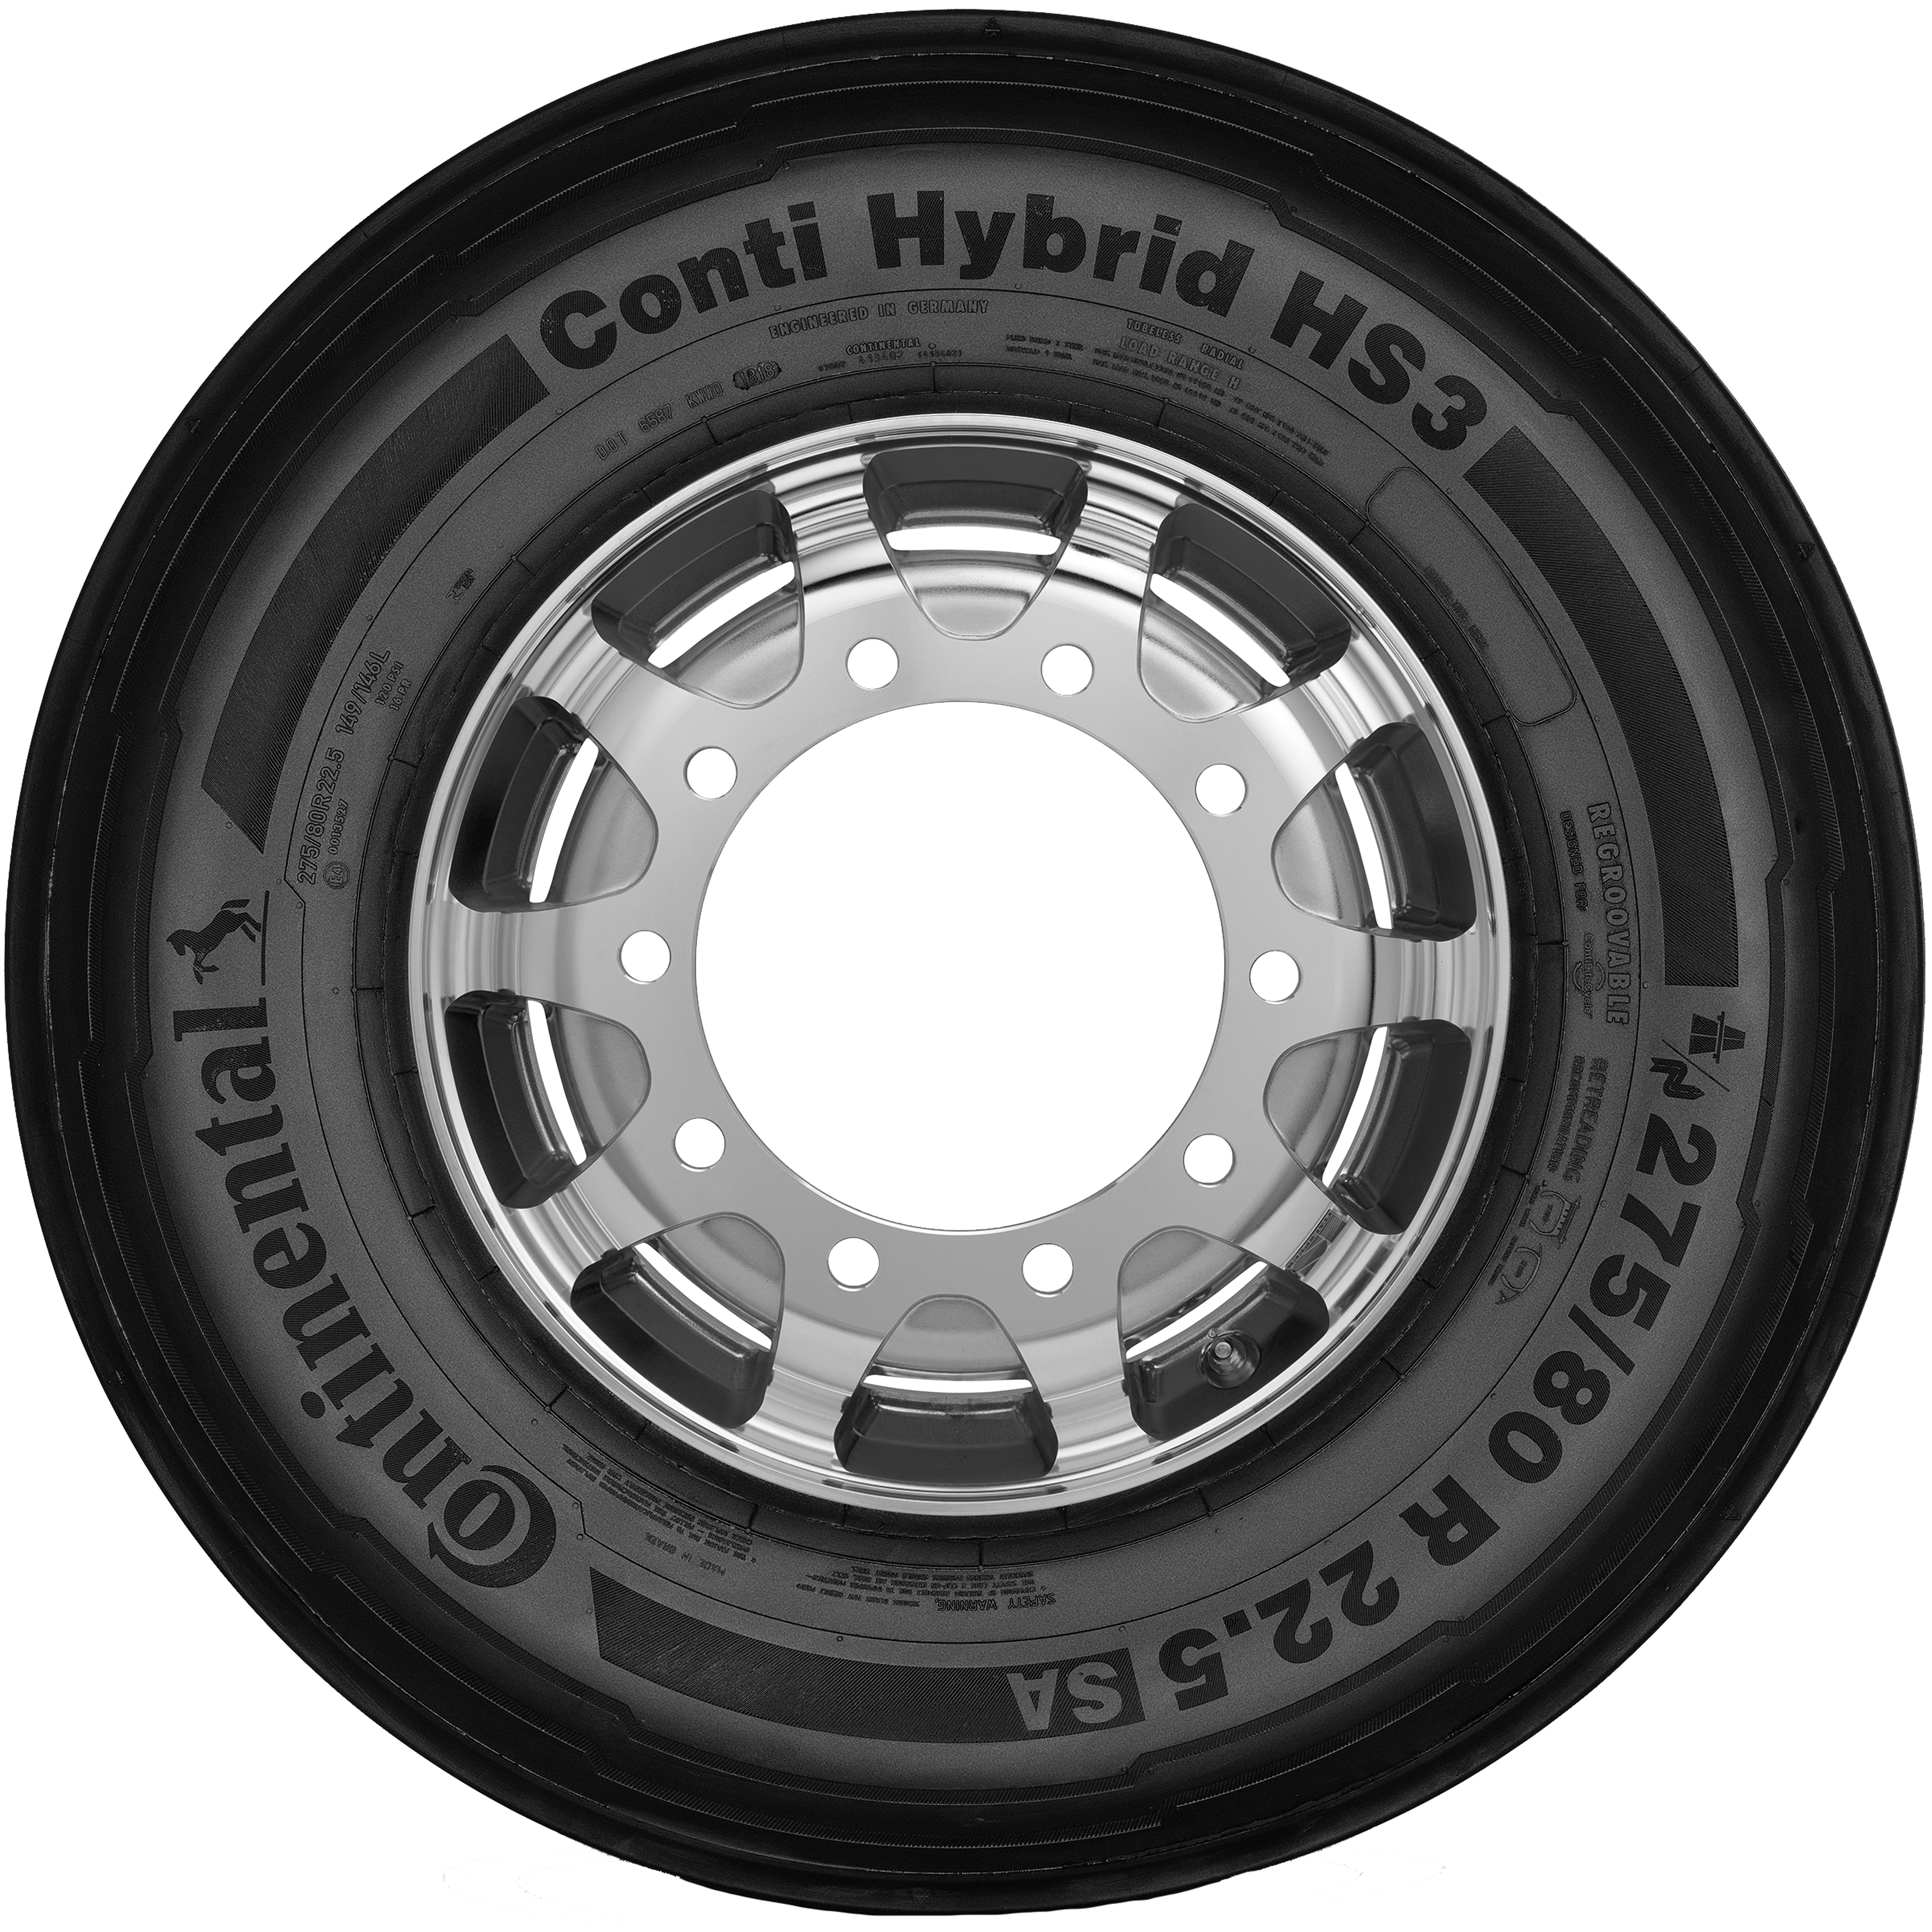 (foto do pneu Conti Hybrid 275/80 R22.5)